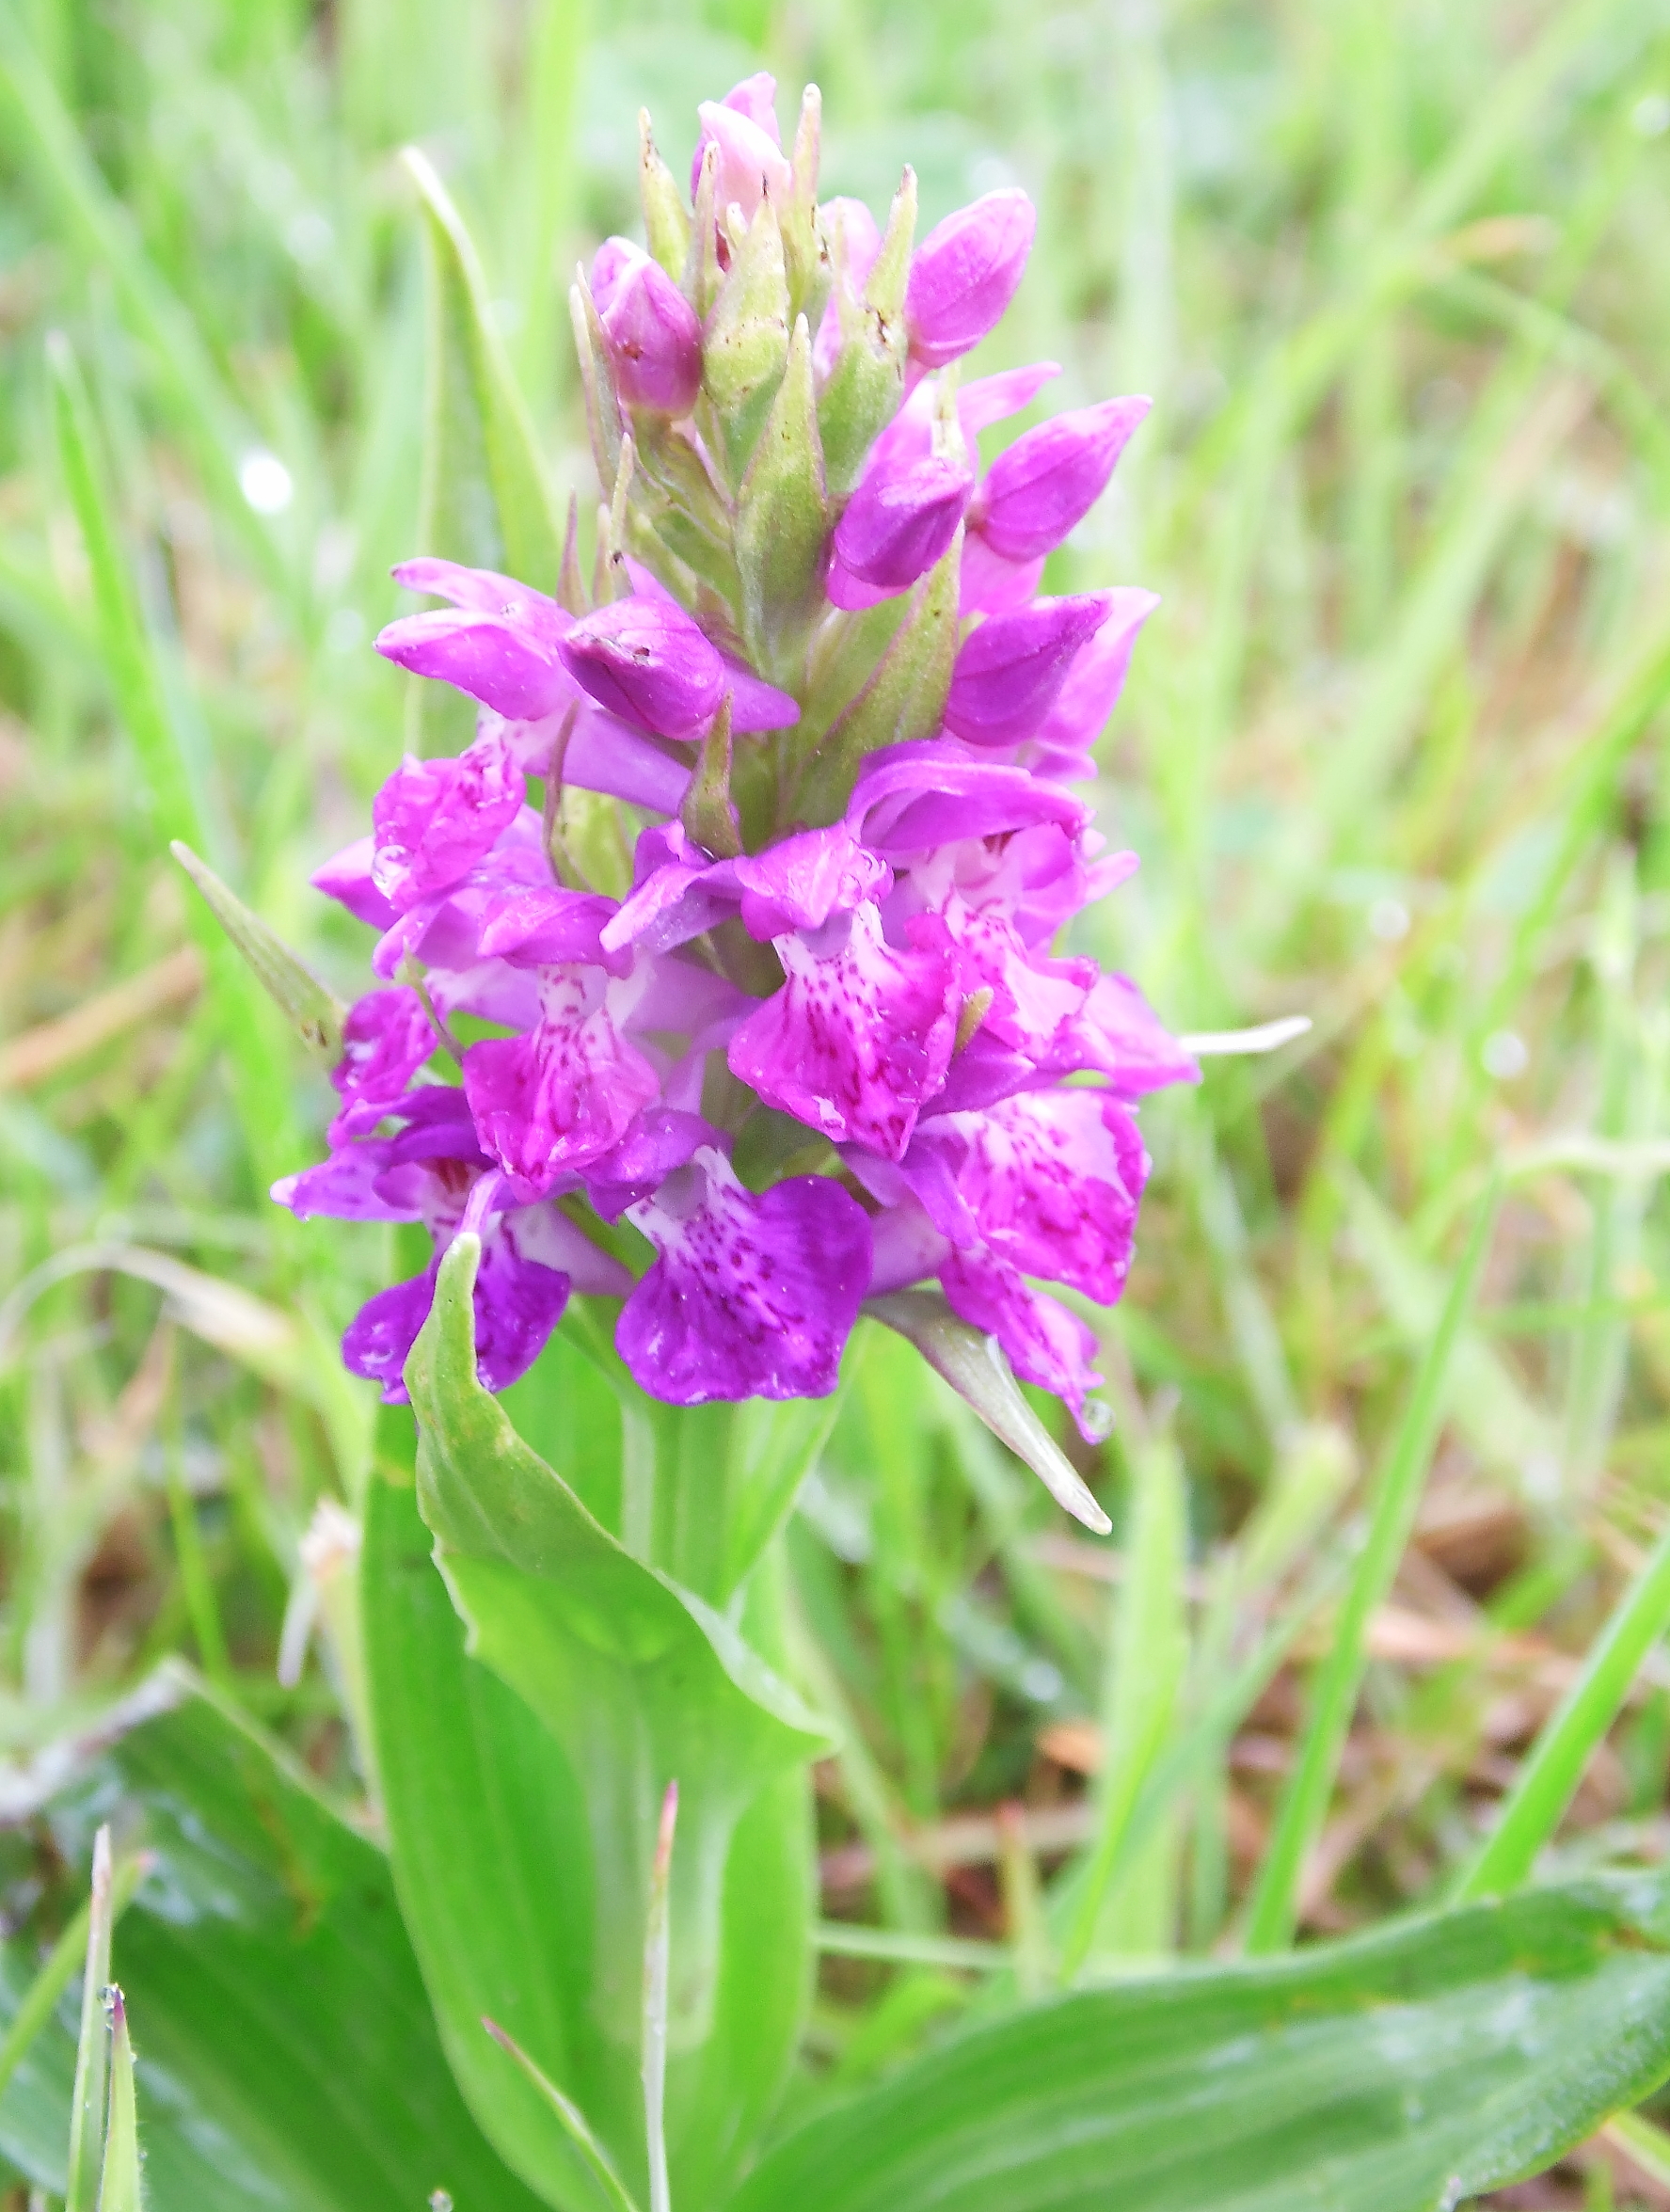 NaturePlus: First wild orchid find id help appreciated